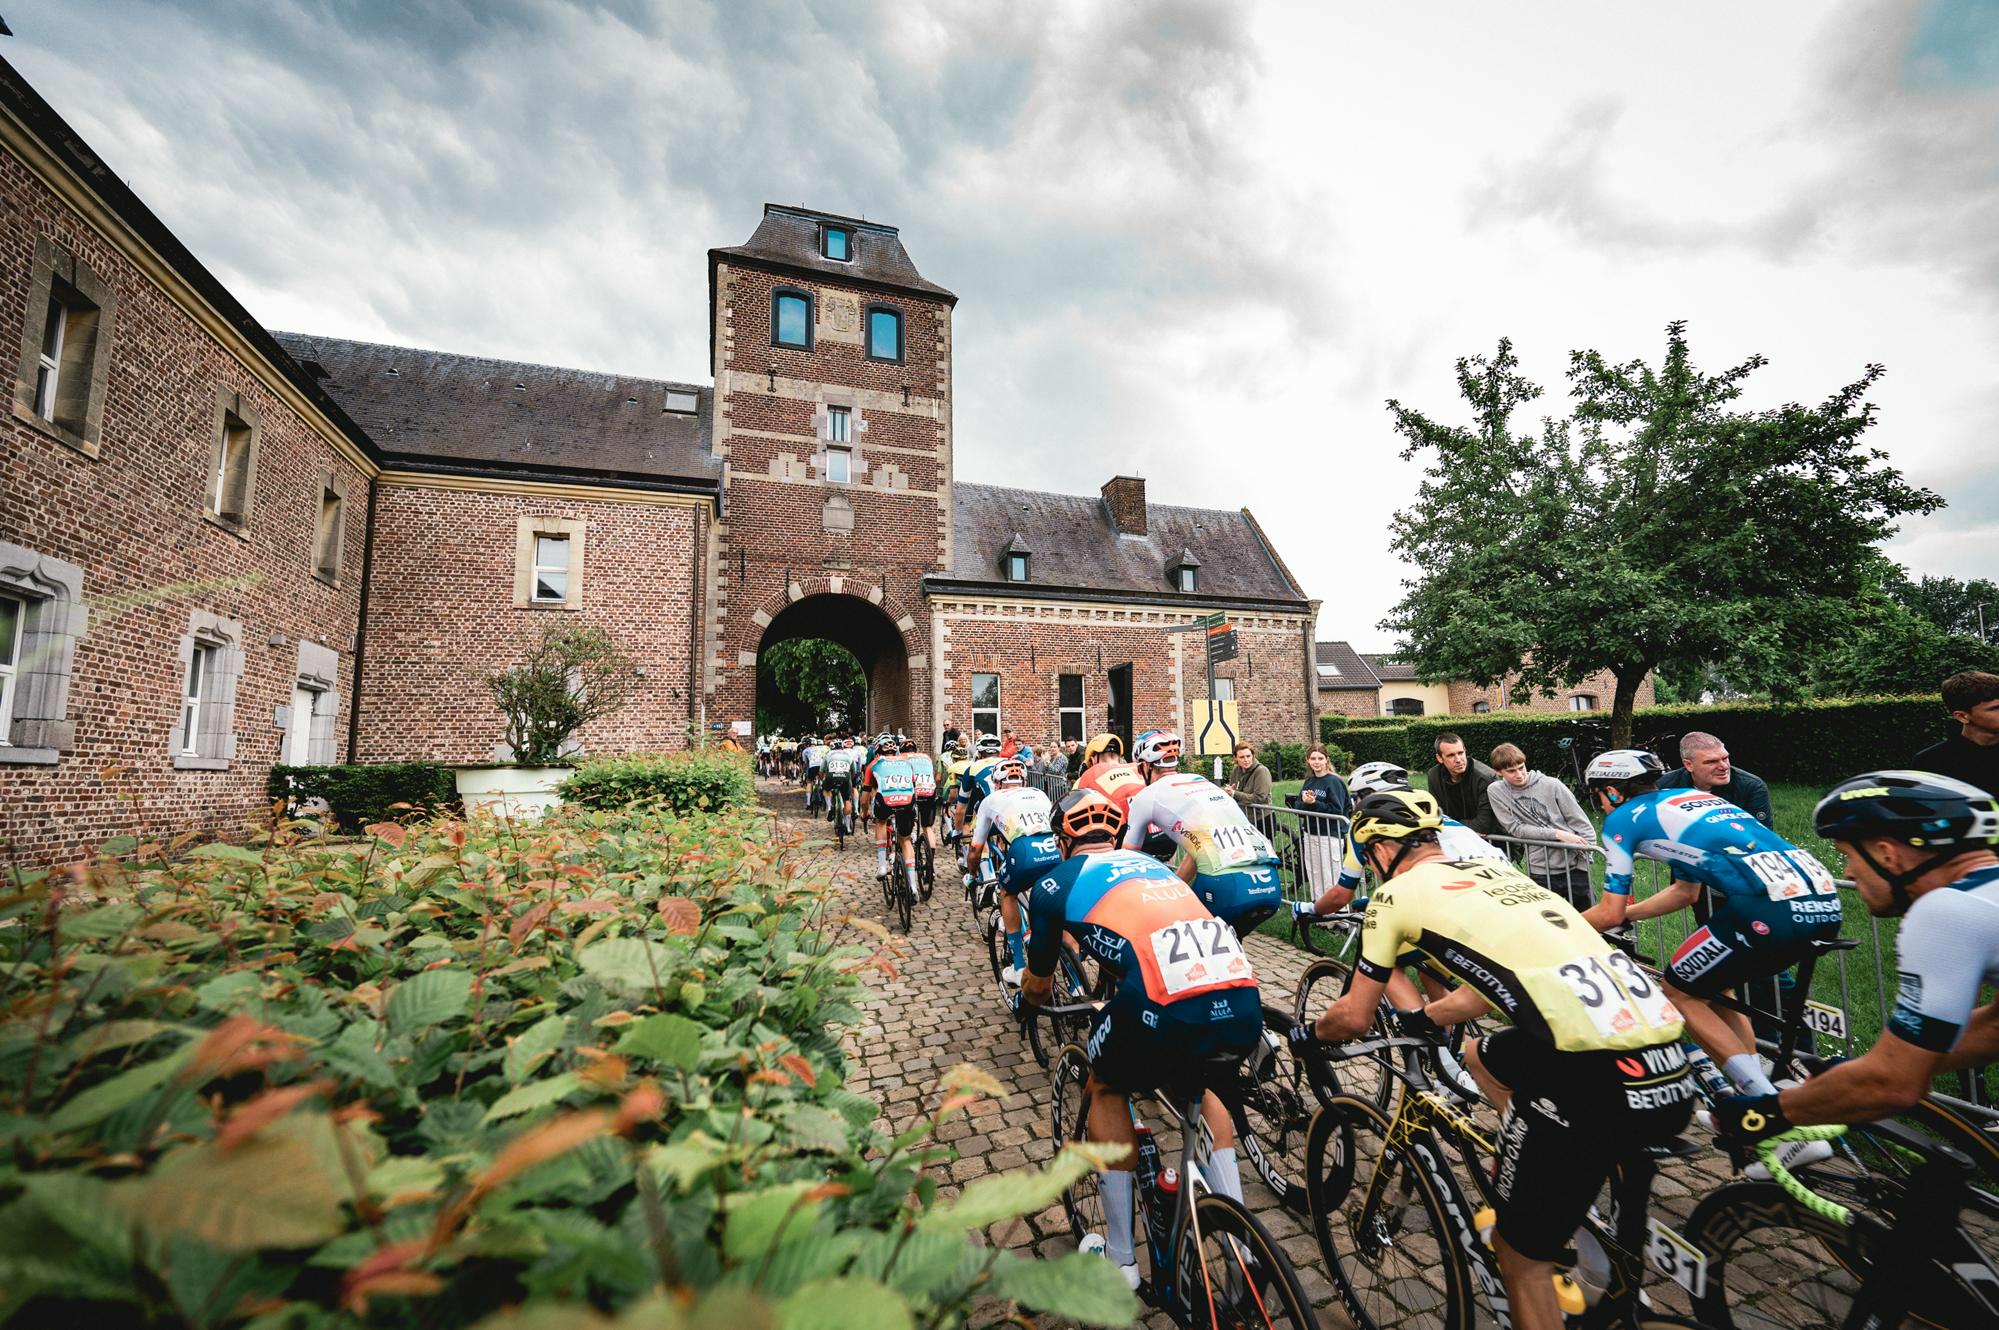 Groenewegen triumphs in the 76th edition of Ronde van Limburg